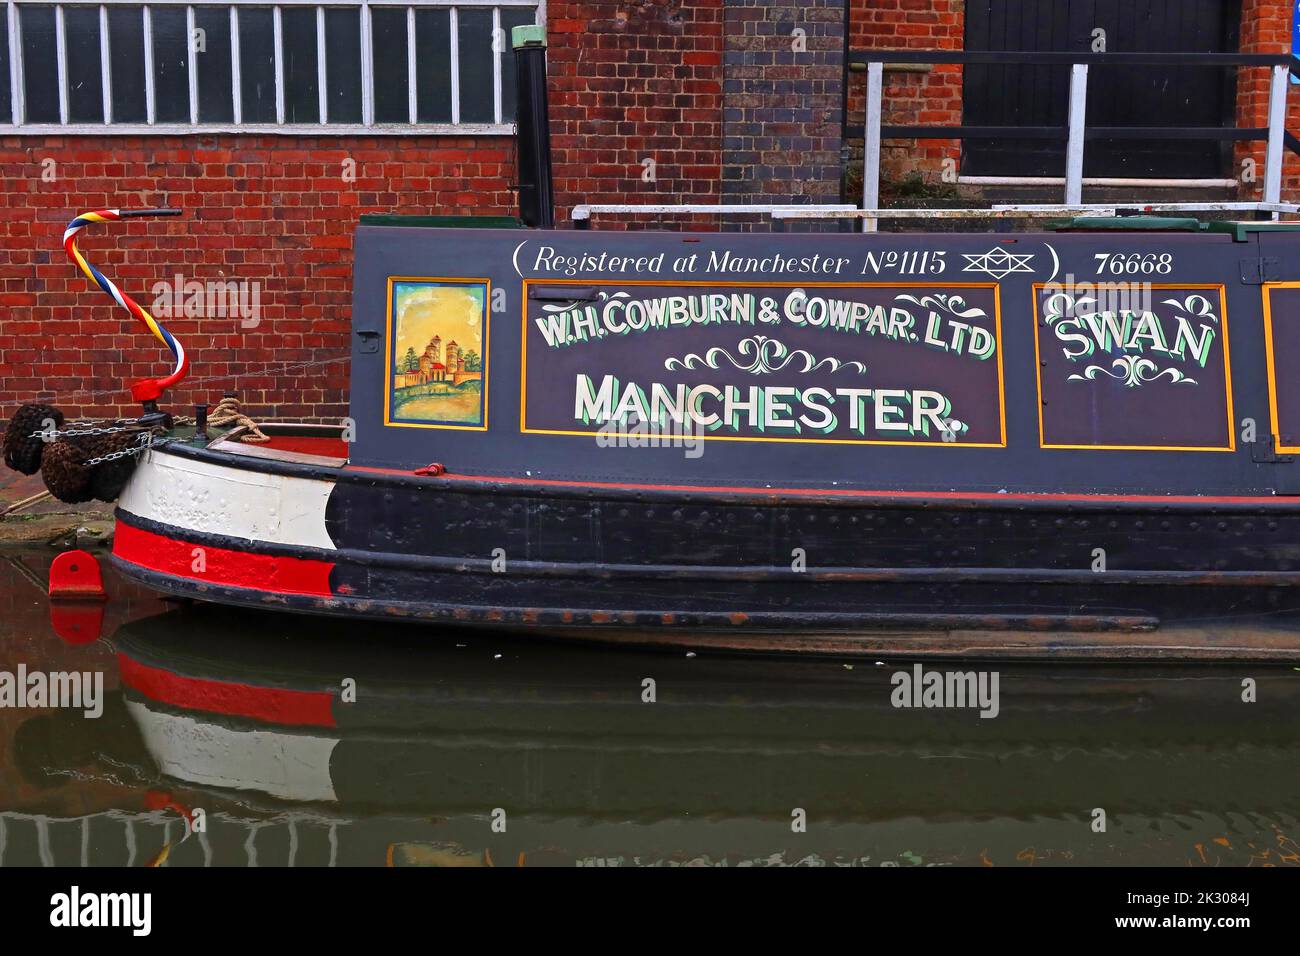 Canal narrowboat barge, Swan, WH Cowburn & Cowpar Ltd,Manchester, No1115, 76668 Stock Photo